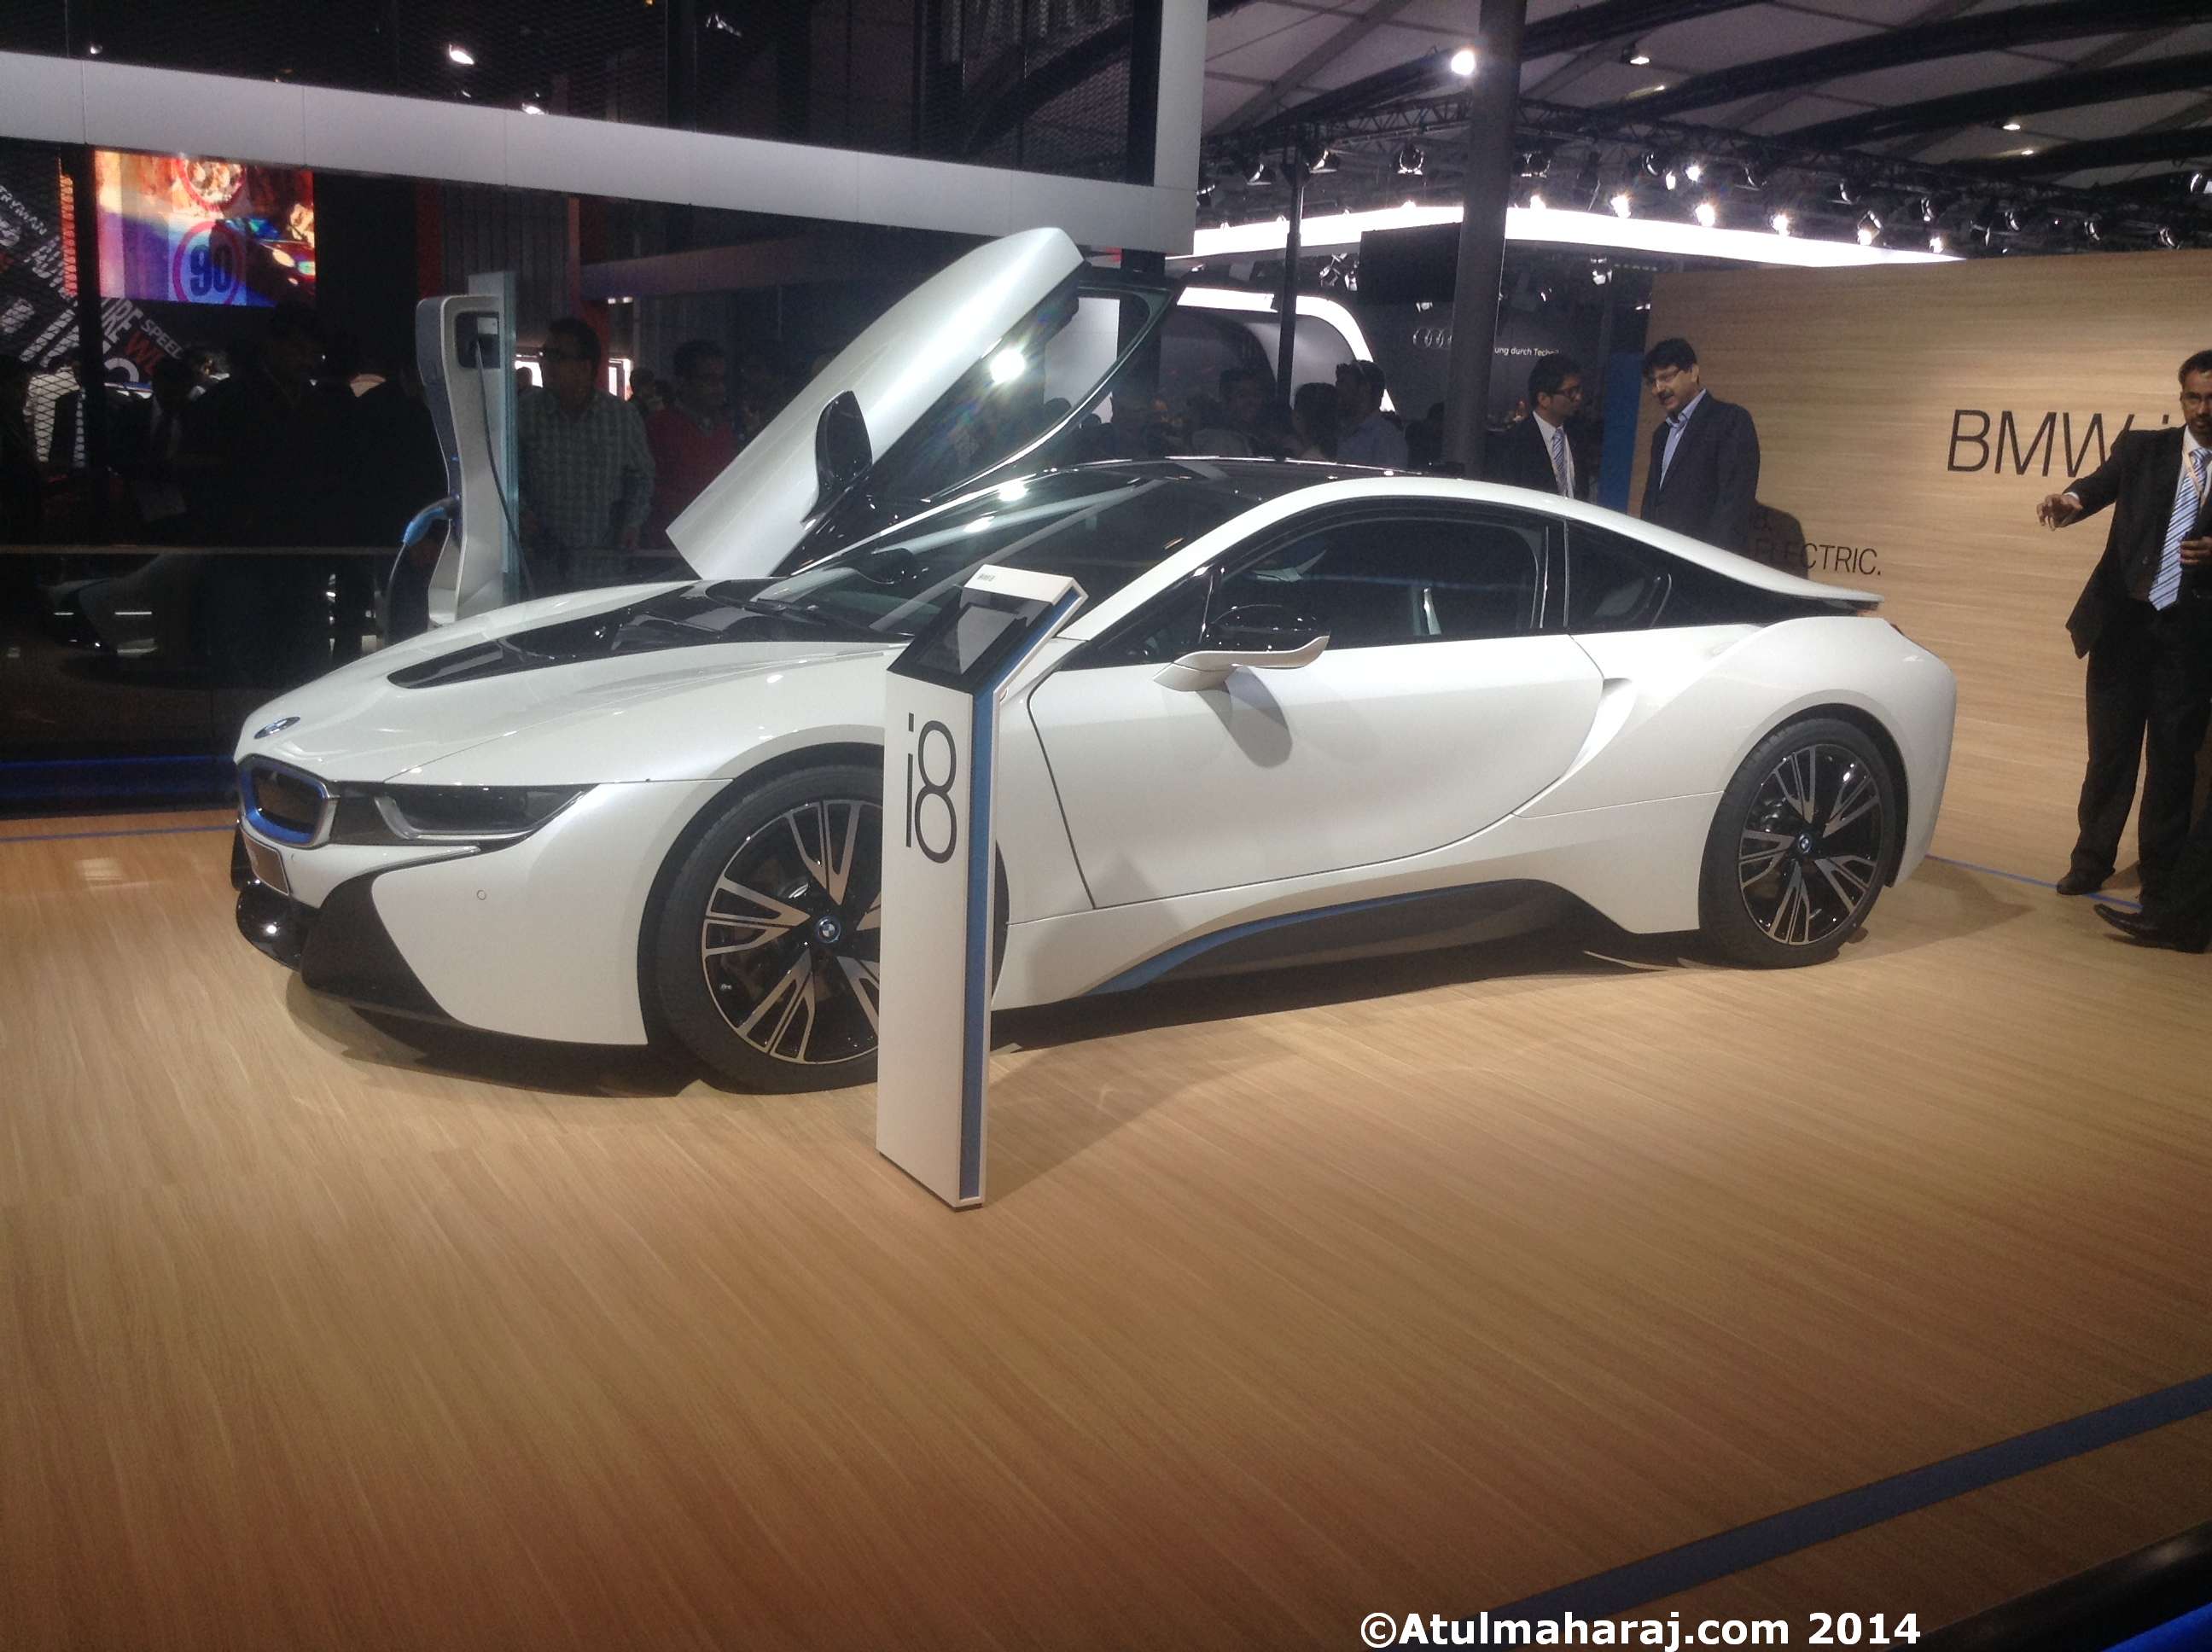 BMW i8 - Auto Expo 2014 - Atulmaharaj